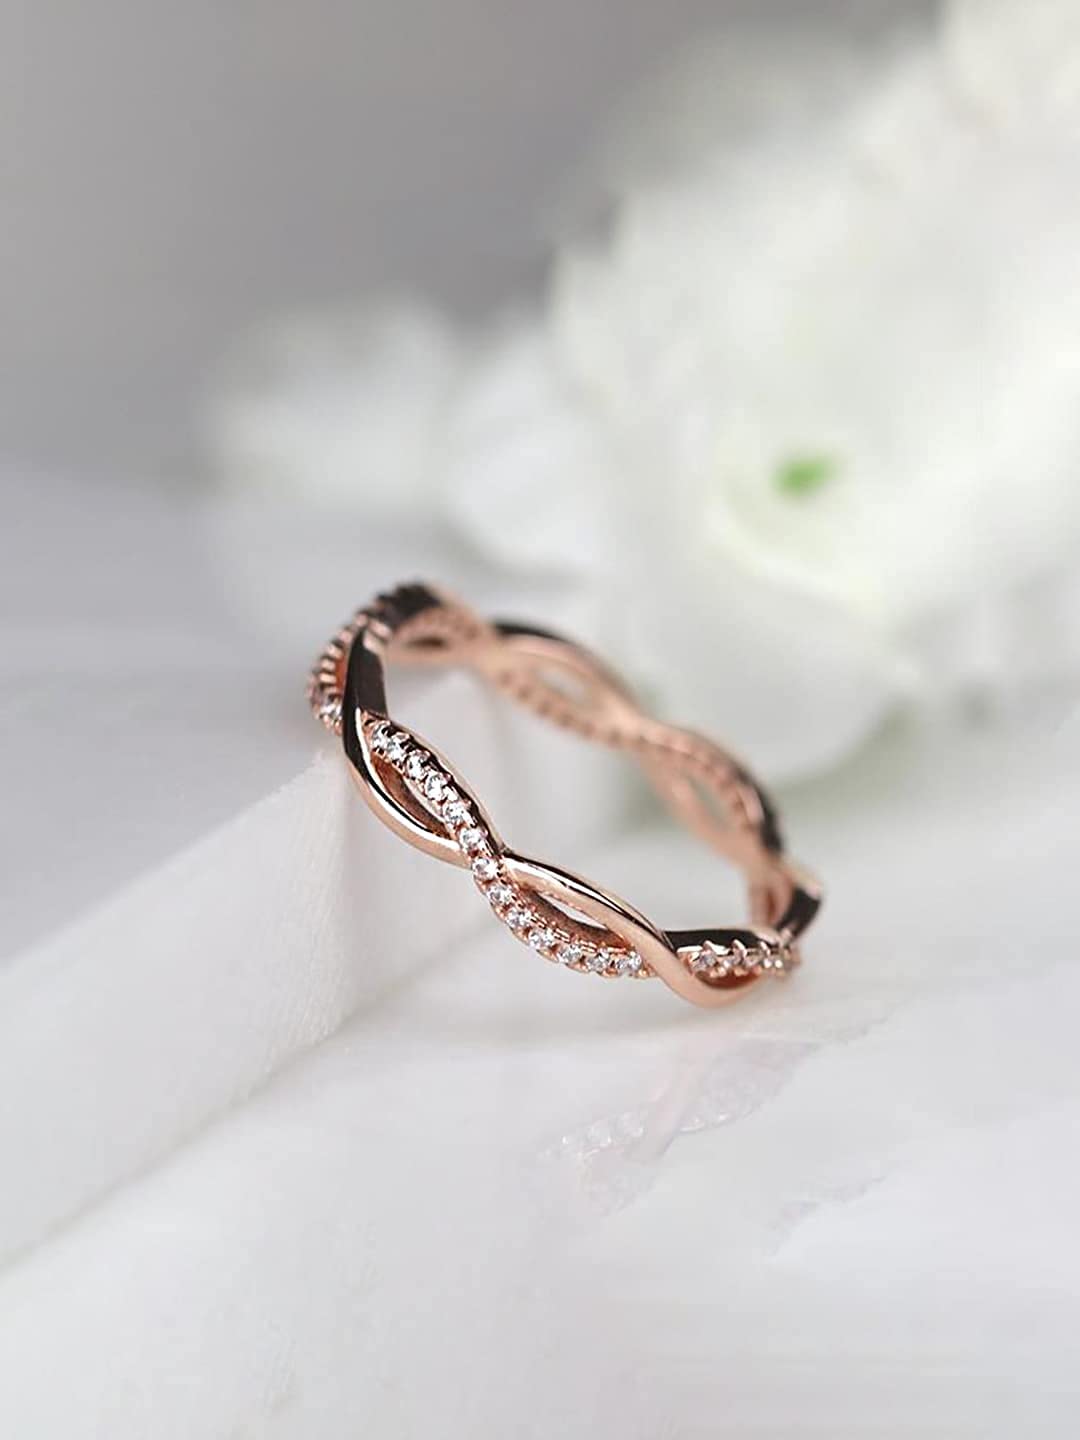 22k Gold Ring Beautiful Enameled Stone Studded Ladies Jewelry Select Size  Ring41 | eBay